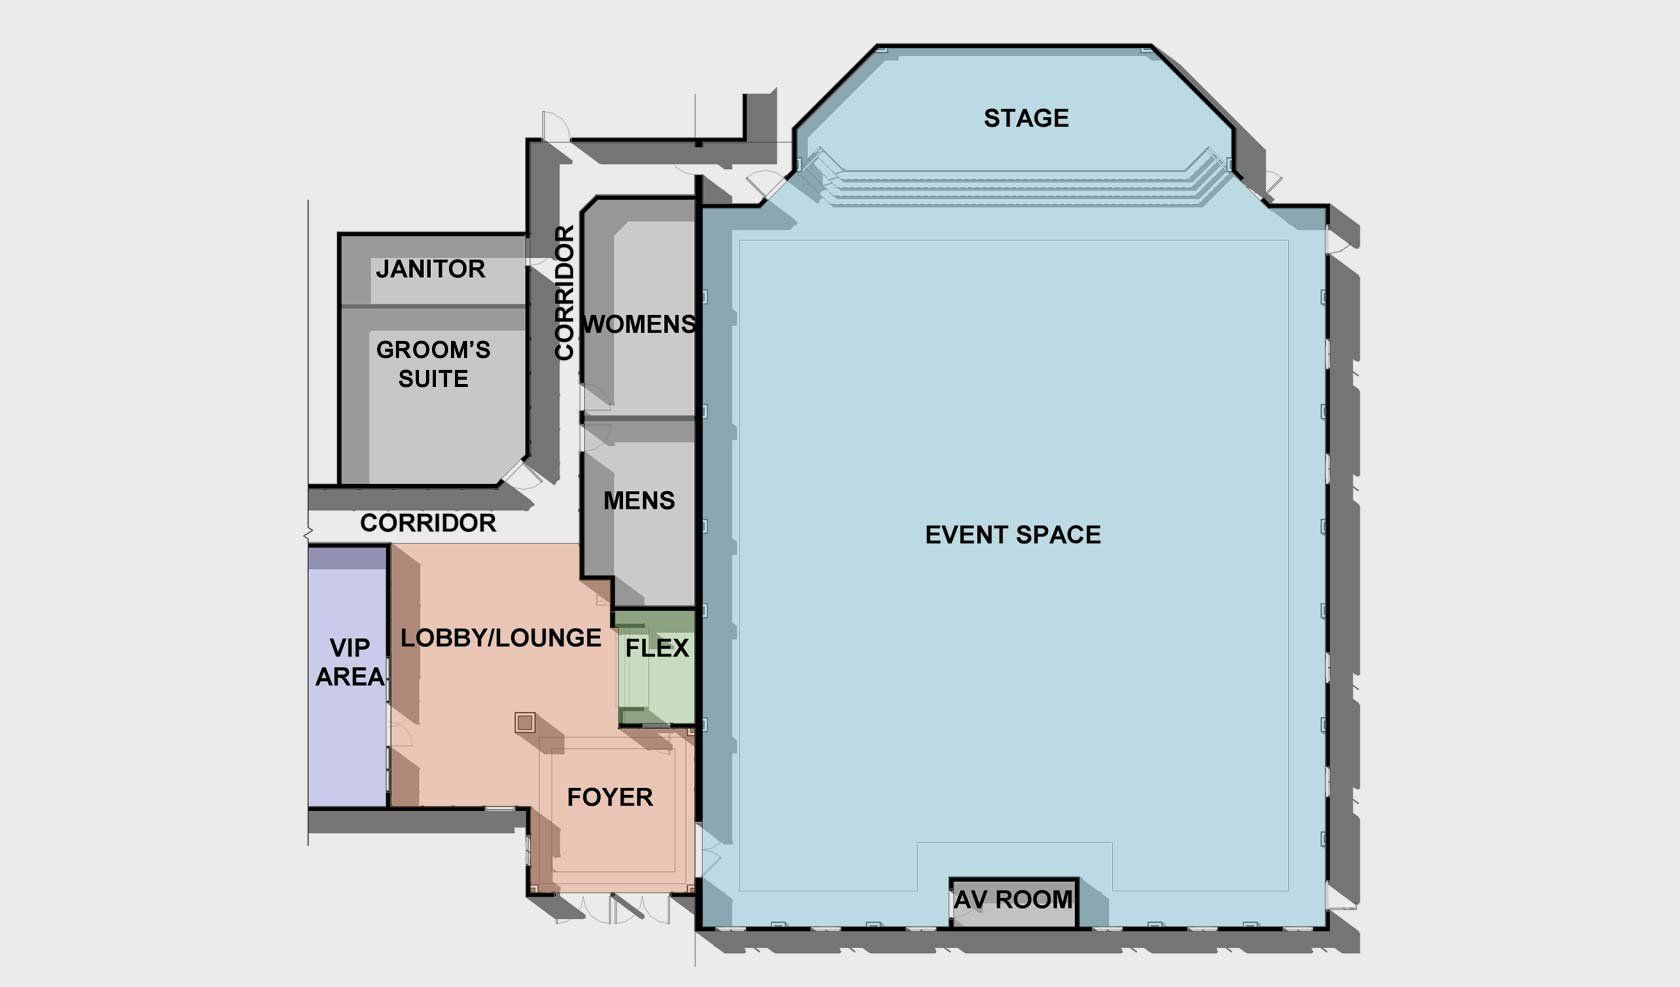 event centre business plan